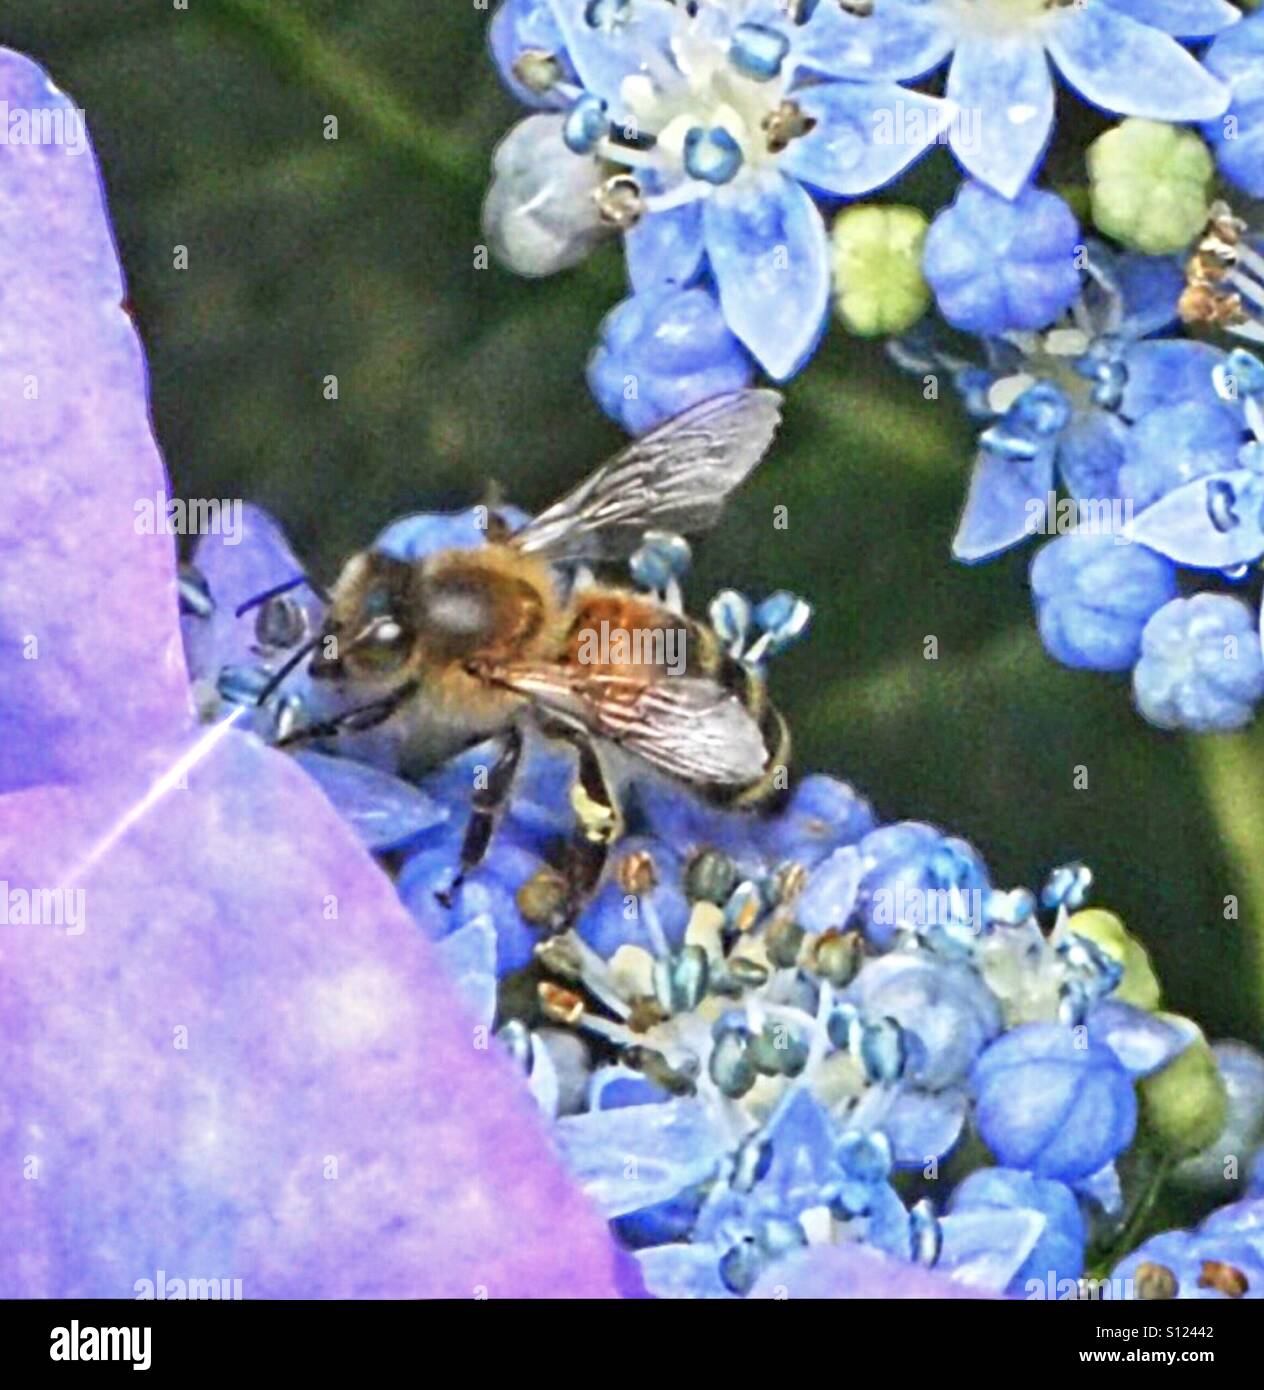 ... honeybee and the flowers (hydrangea) Stock Photo